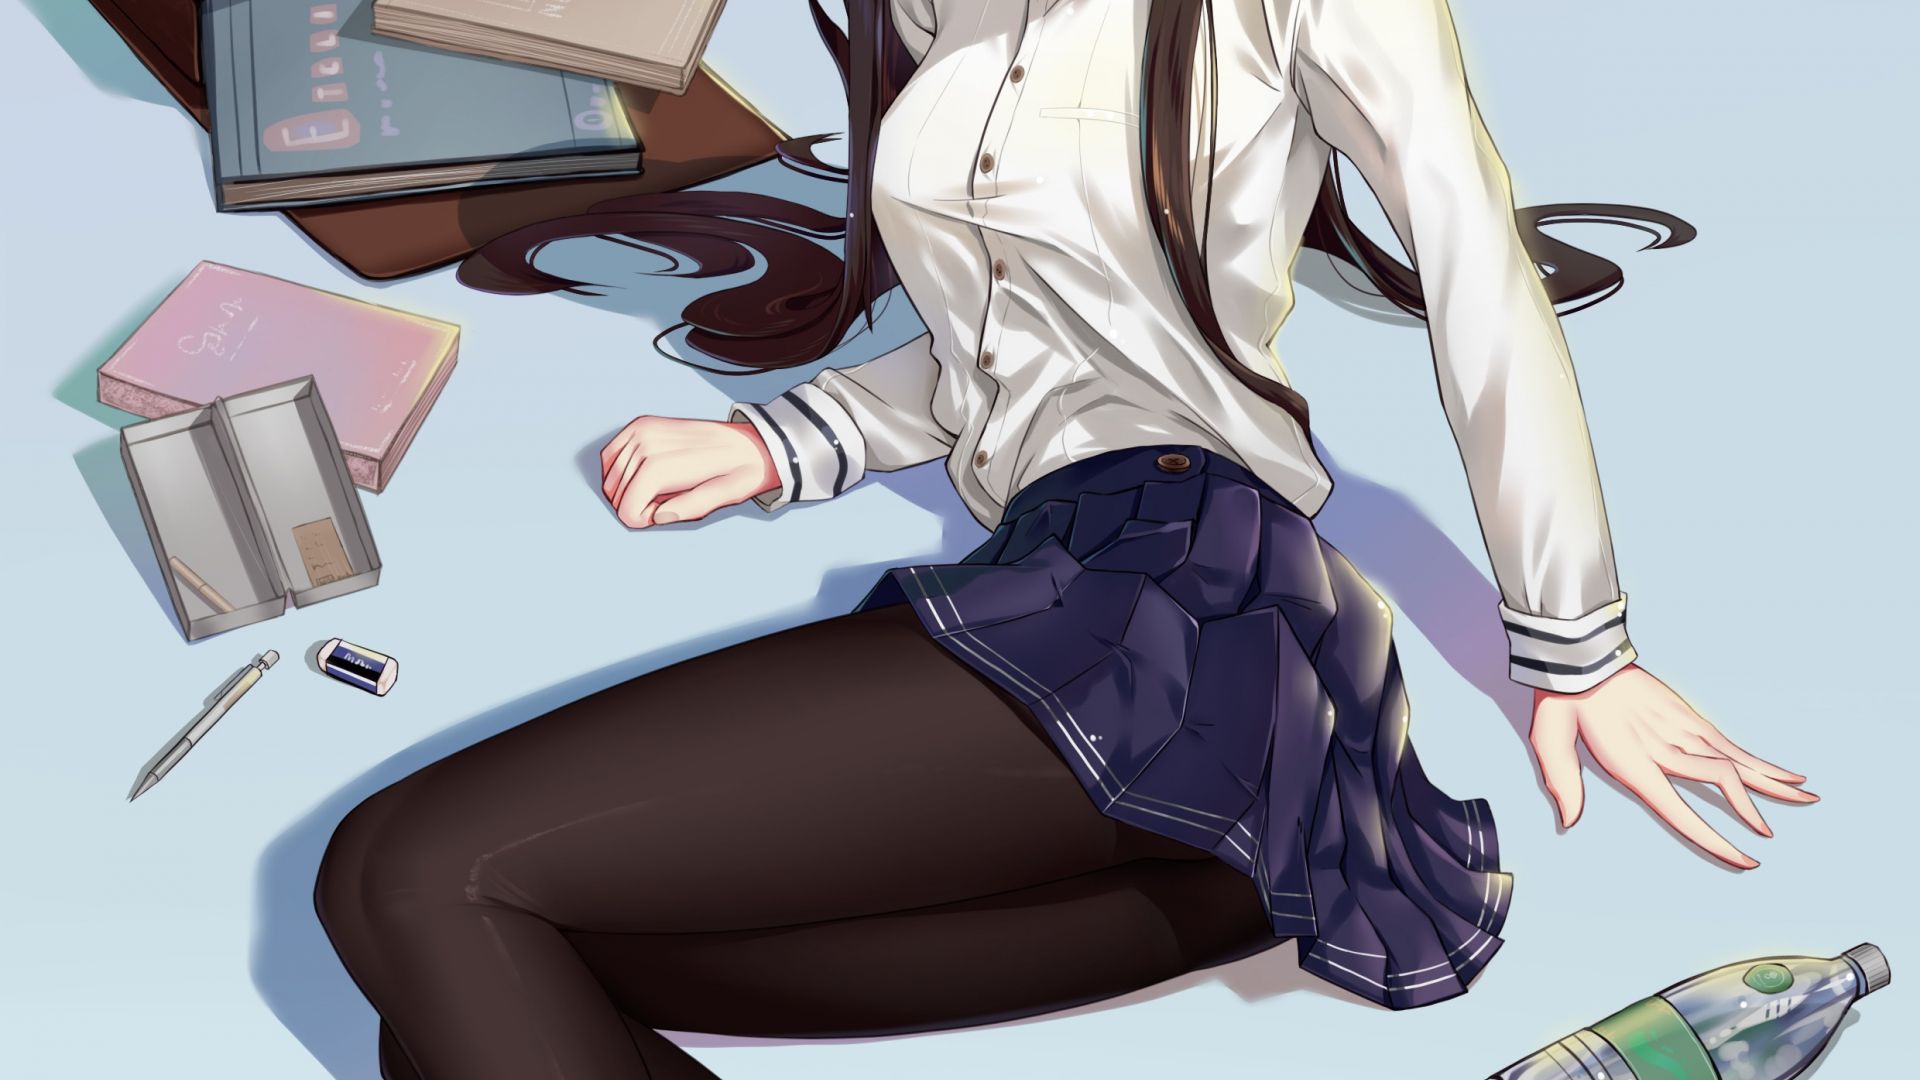 Desktop Wallpaper Long Hair Anime Girl, Hd Image, Picture, Background,  4ytkew